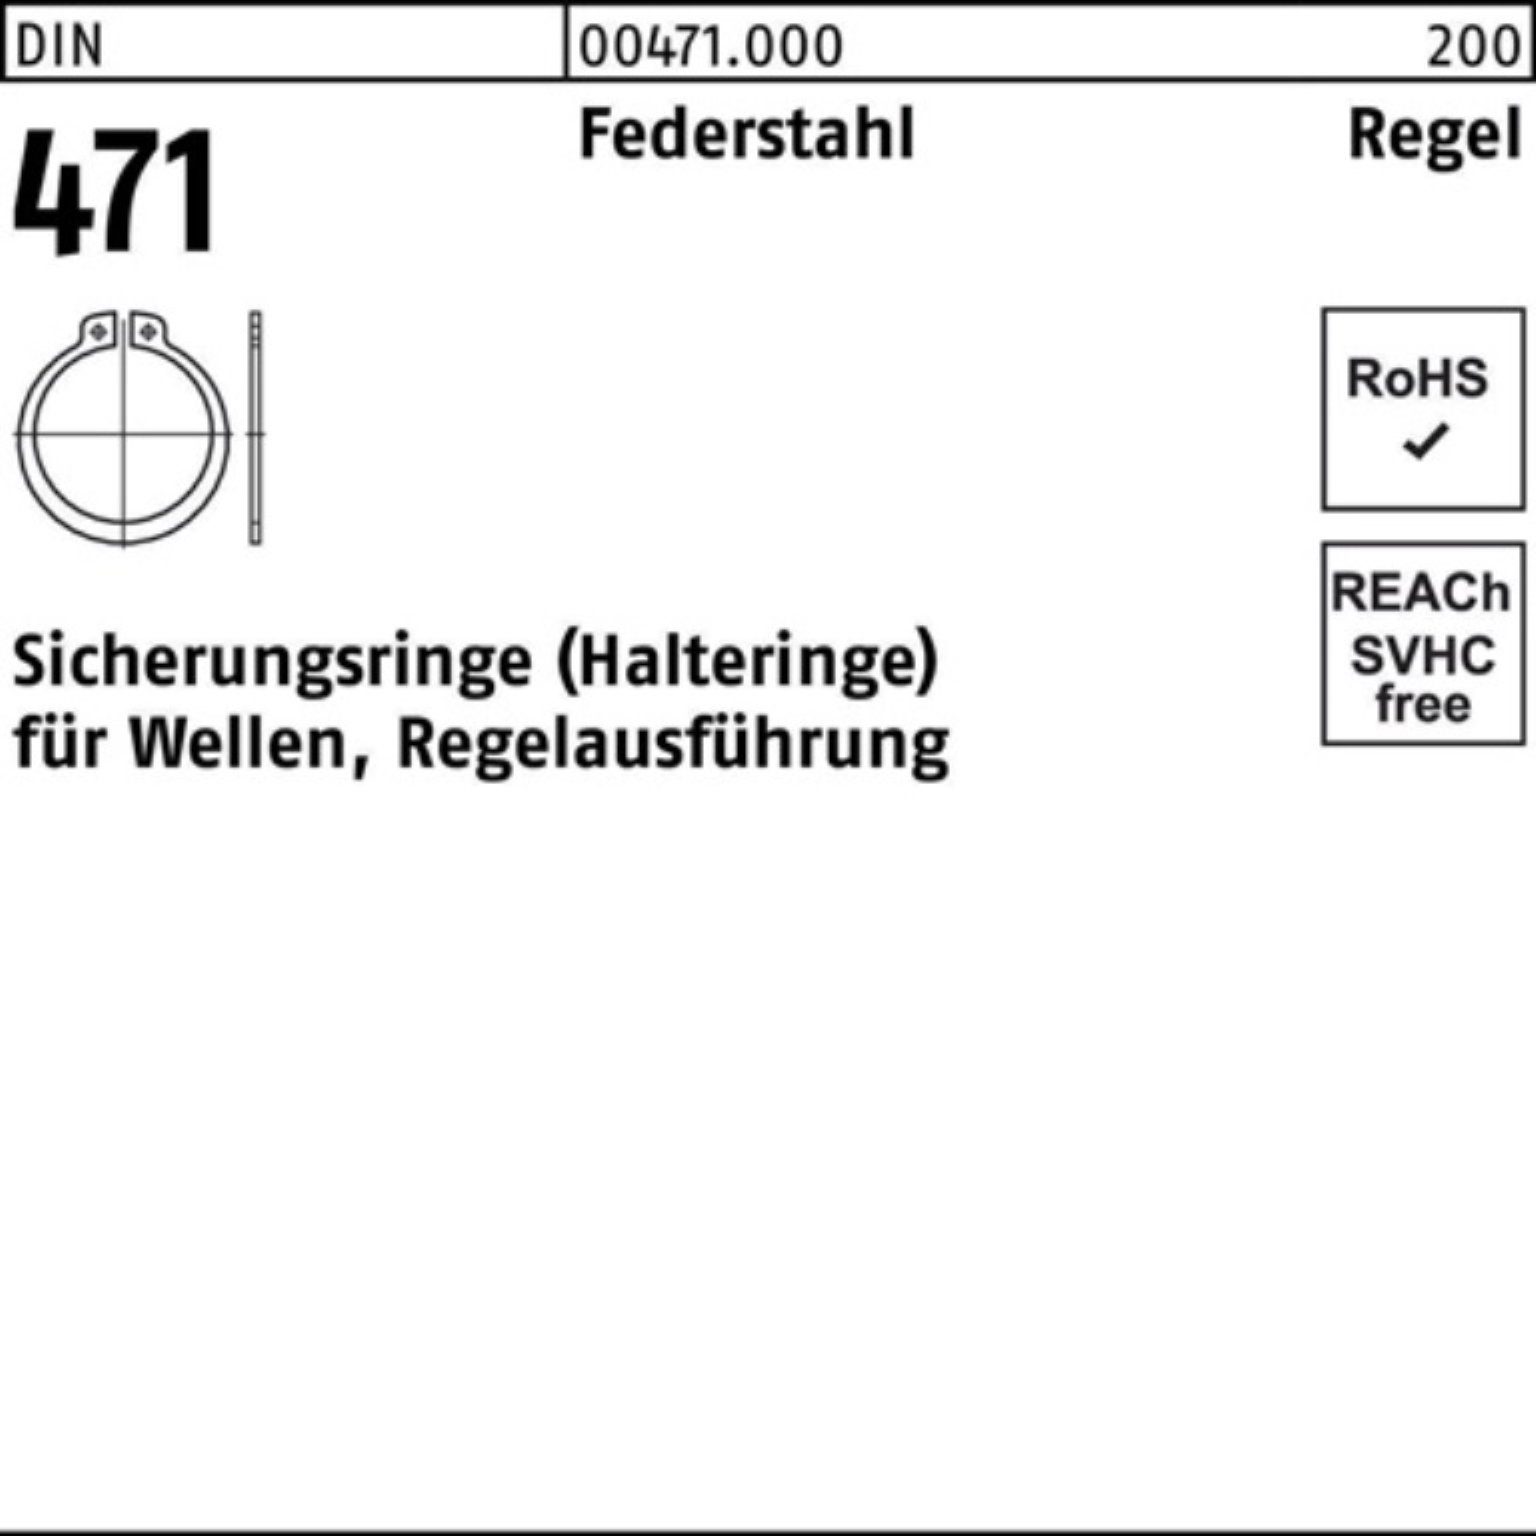 St Federstahl Sicherungsring Pack 471 Reyher 1 Sicherungsring 1000er DIN 15x Regelausf. 1000